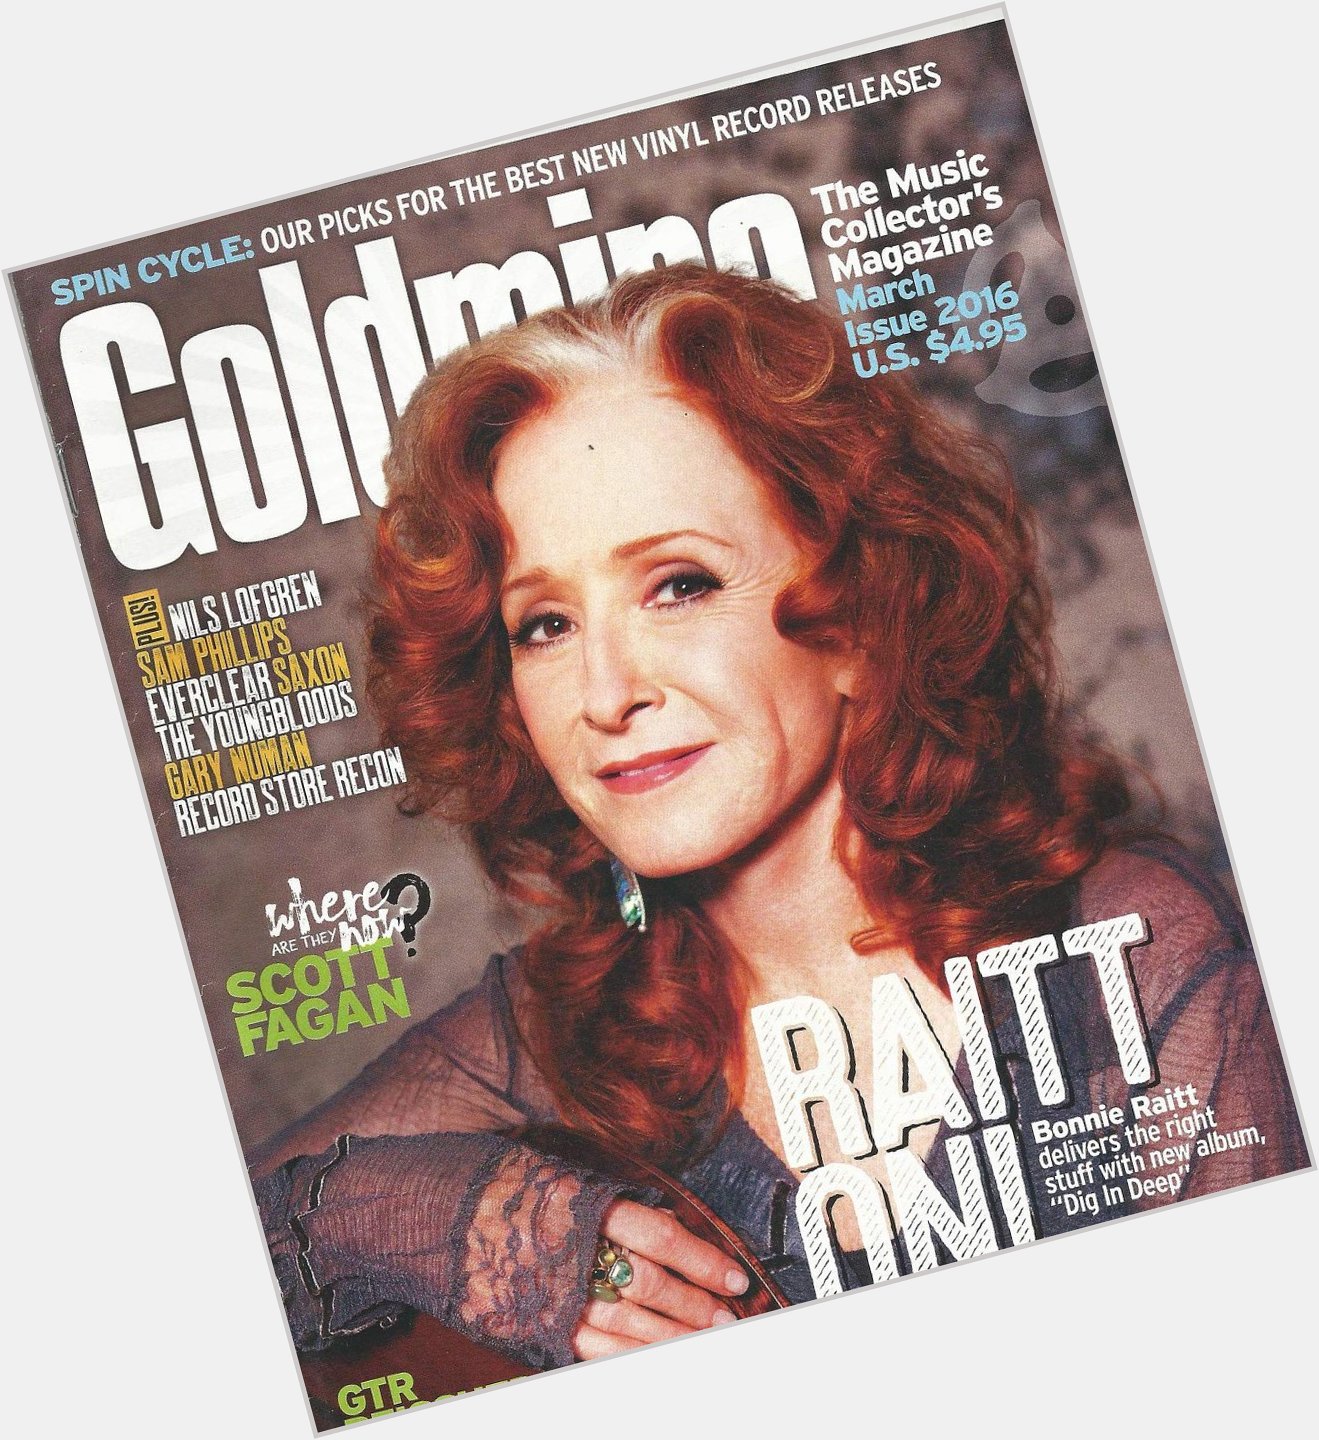 Happy birthday, Bonnie Raitt, born in 1949. Here is the last Bonnie cover of Goldmine. 